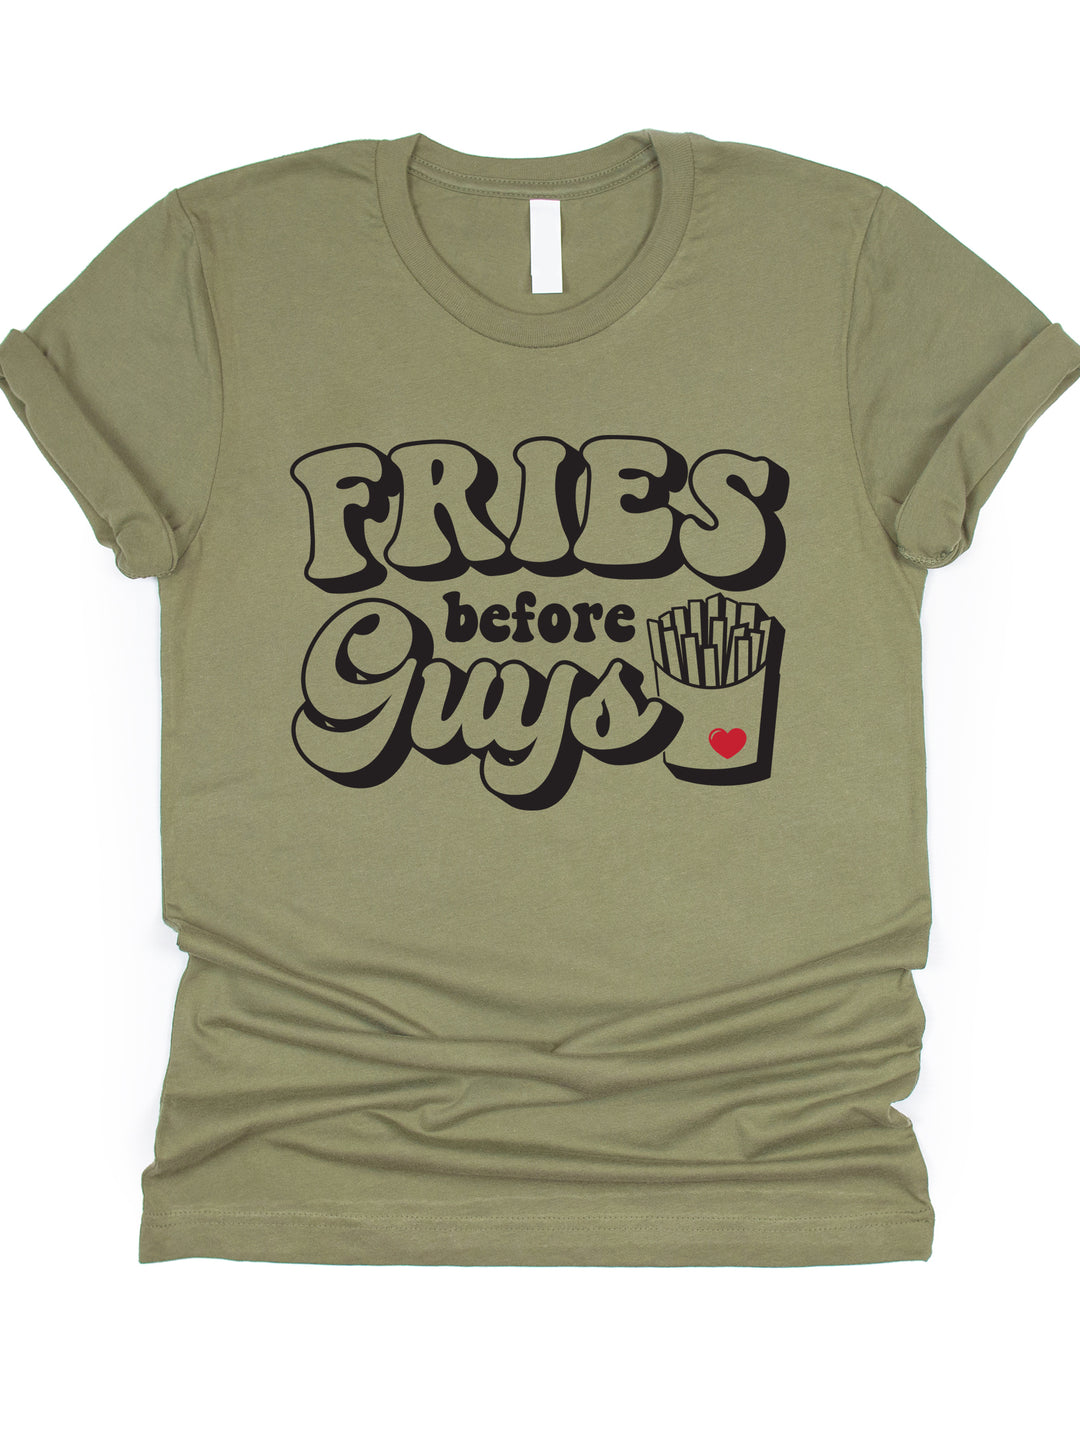 Fries before Guys Graphic Tee